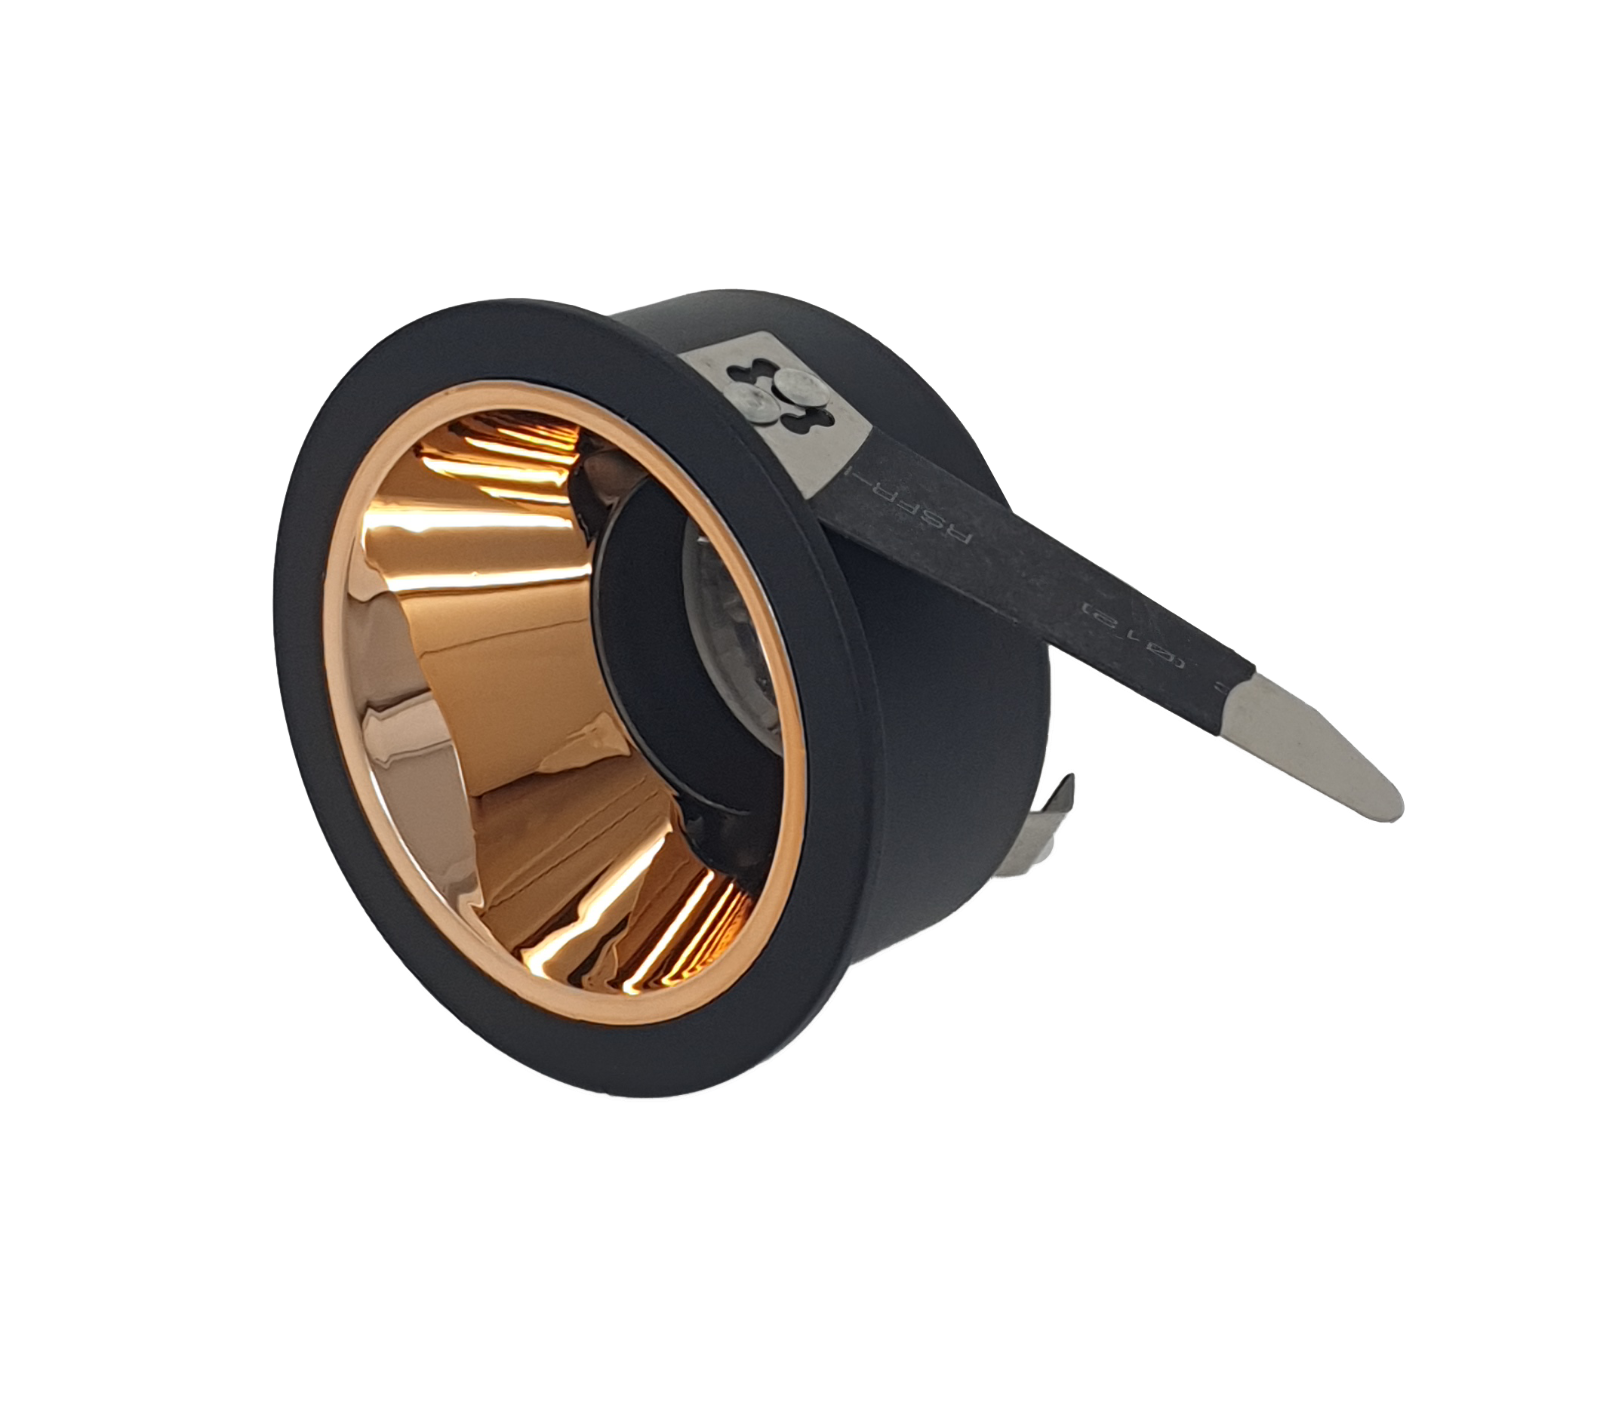 4x Reflector GU10 Ceiling Recessed Downlight Rose Gold Black-White Black Chrome UKEW